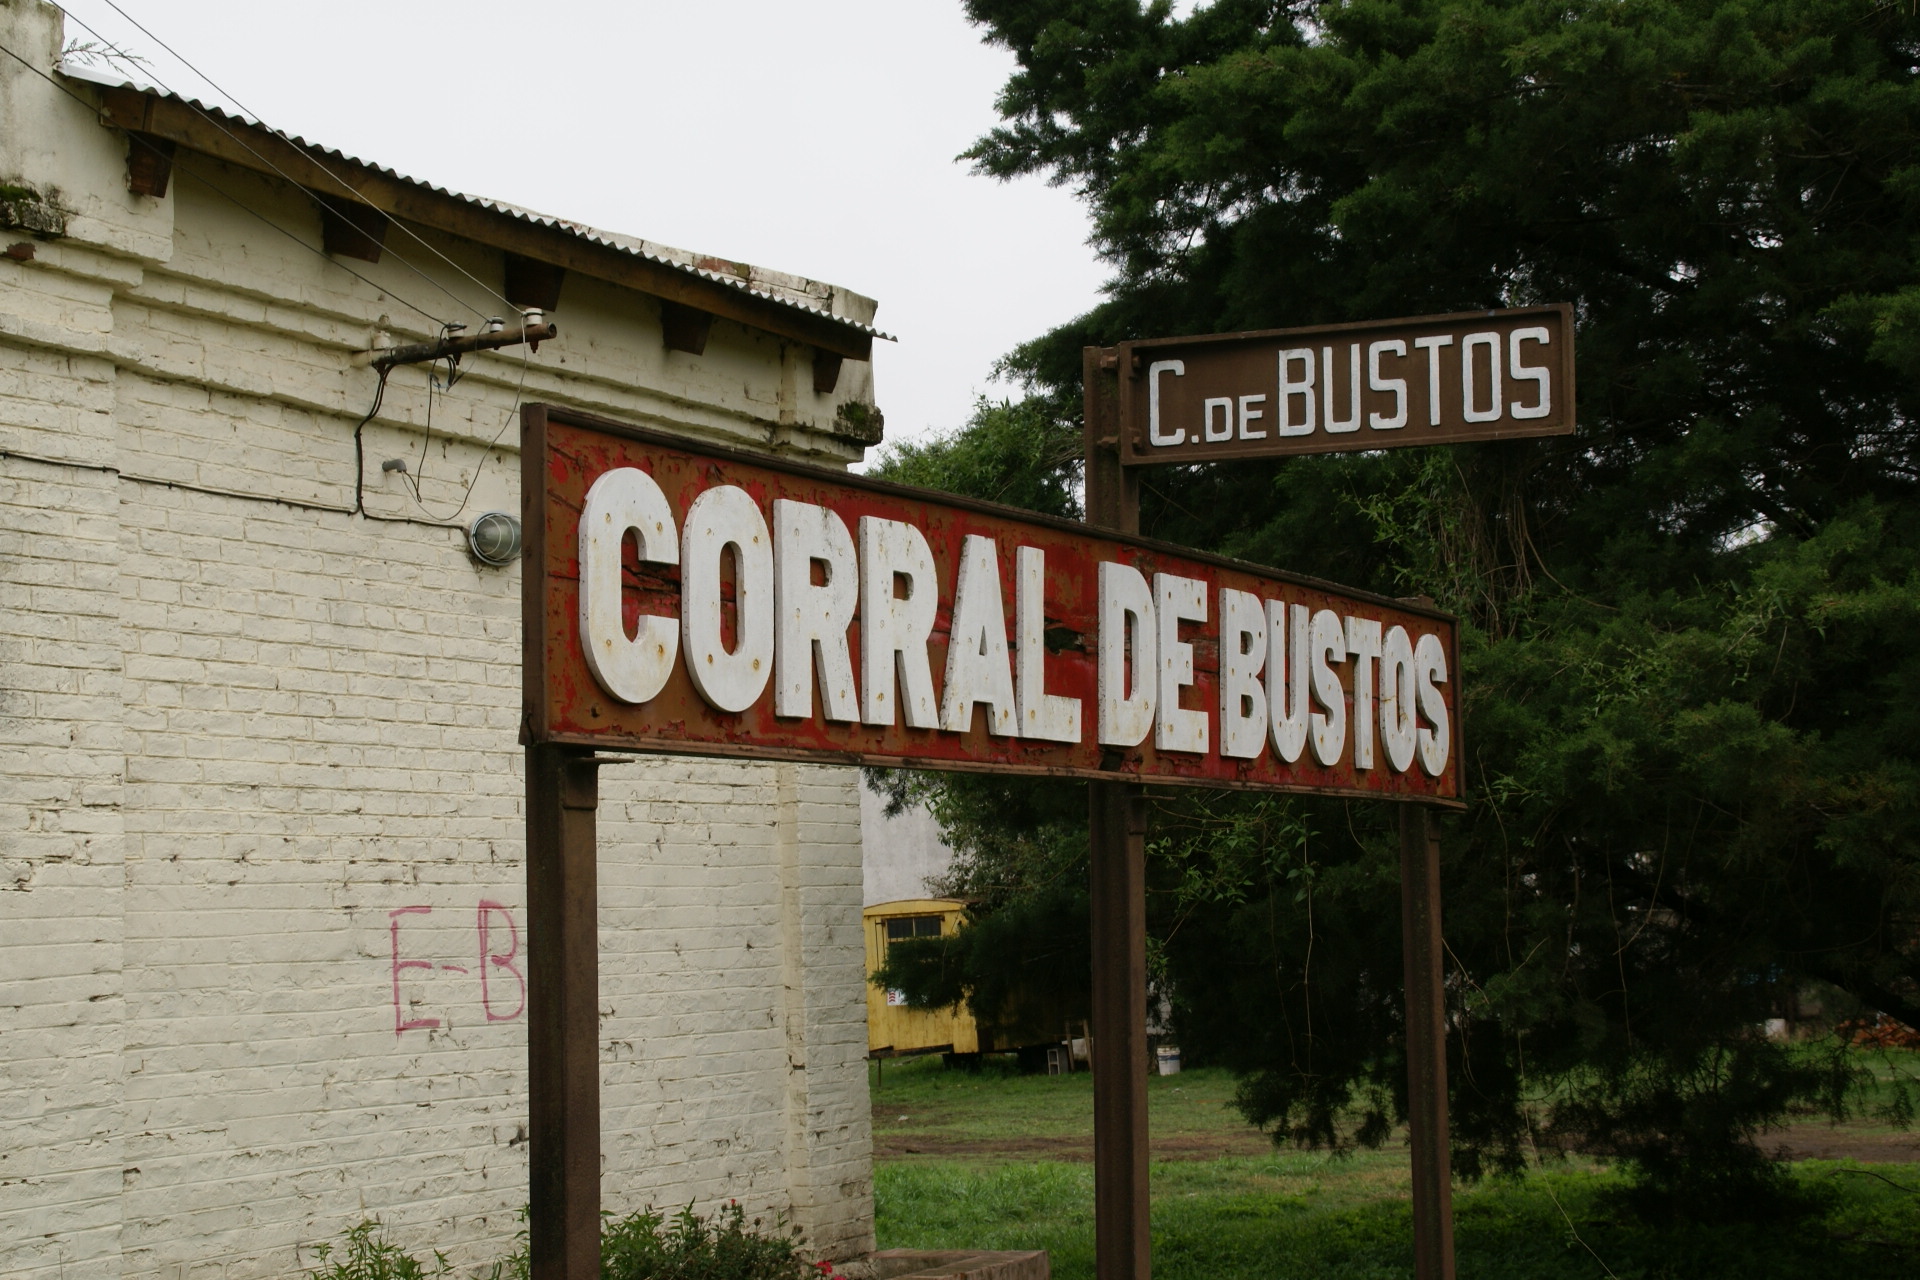 http://upload.wikimedia.org/wikipedia/commons/6/60/2011.10.19.090752_Train_station_Corral_de_Bustos_Argentina.jpg